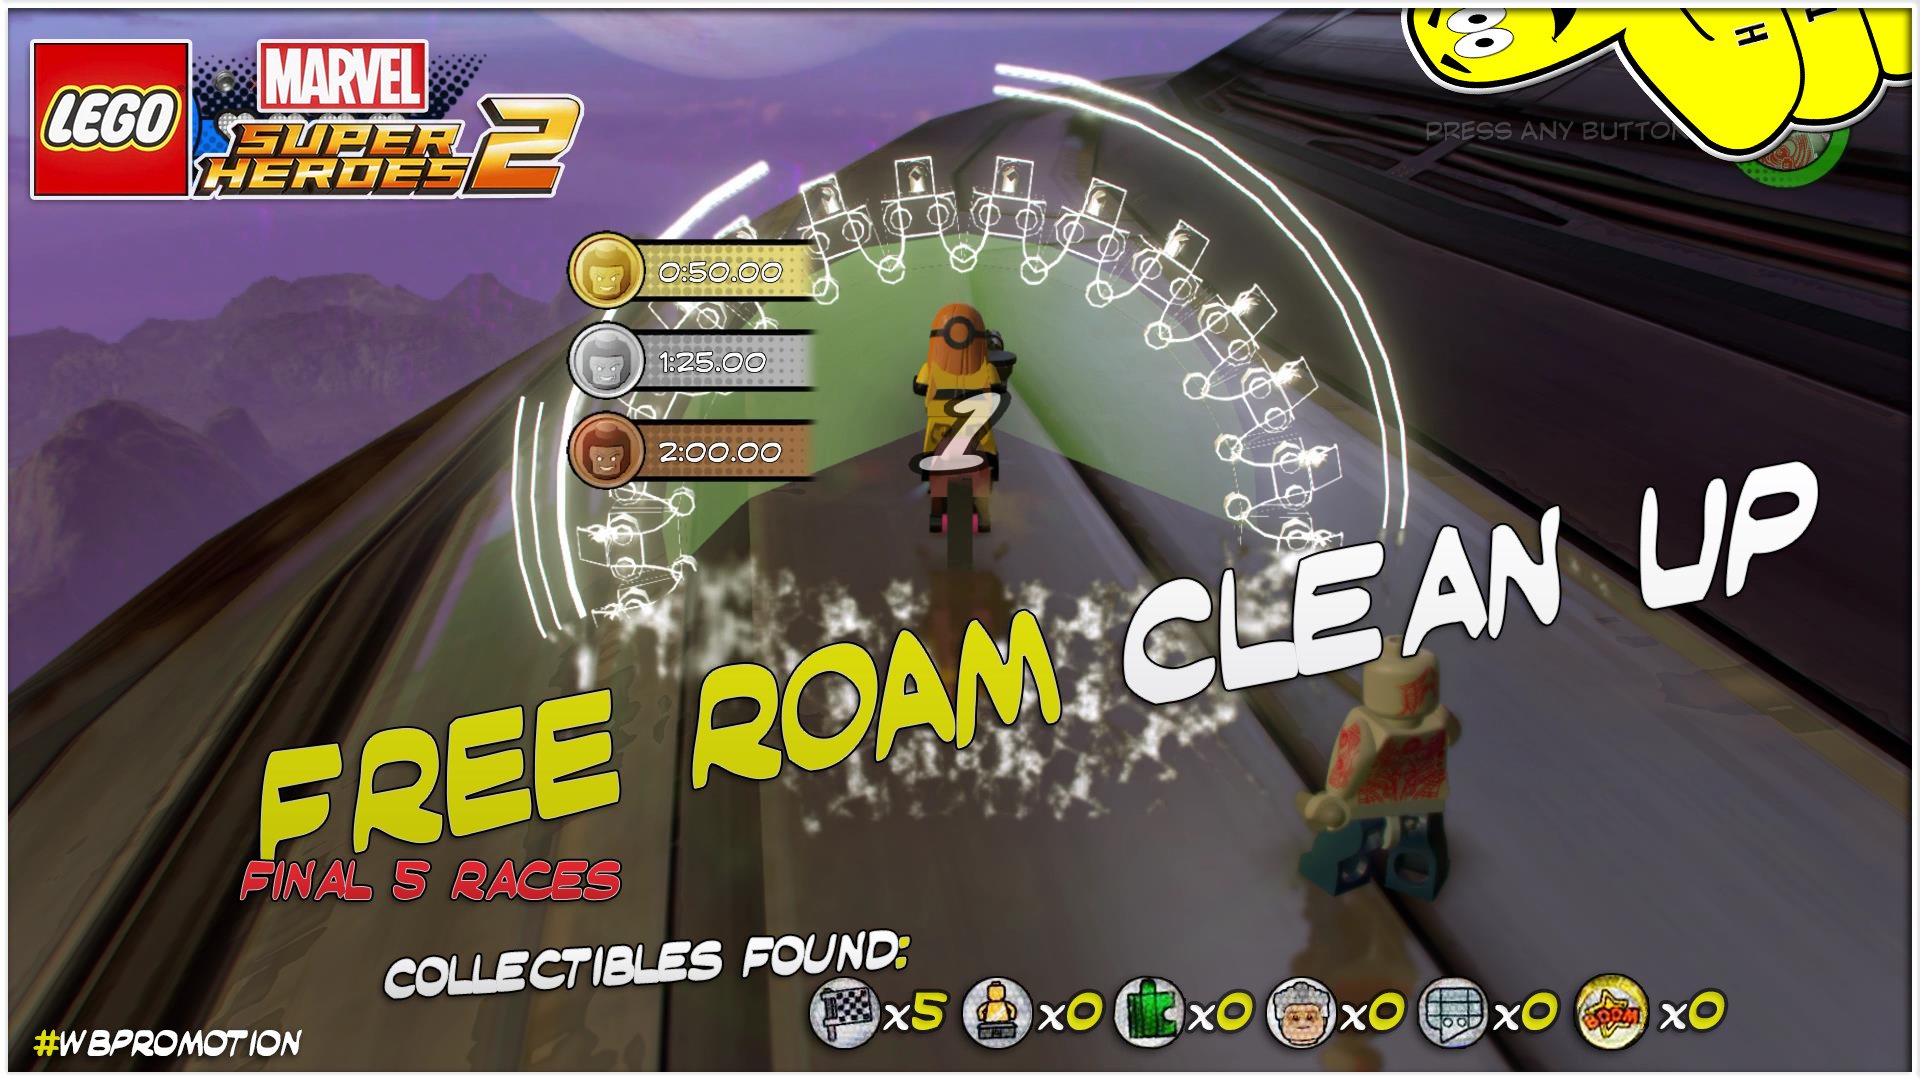 Lego Marvel Superheroes 2: FREE ROAM Clean Up – HTG